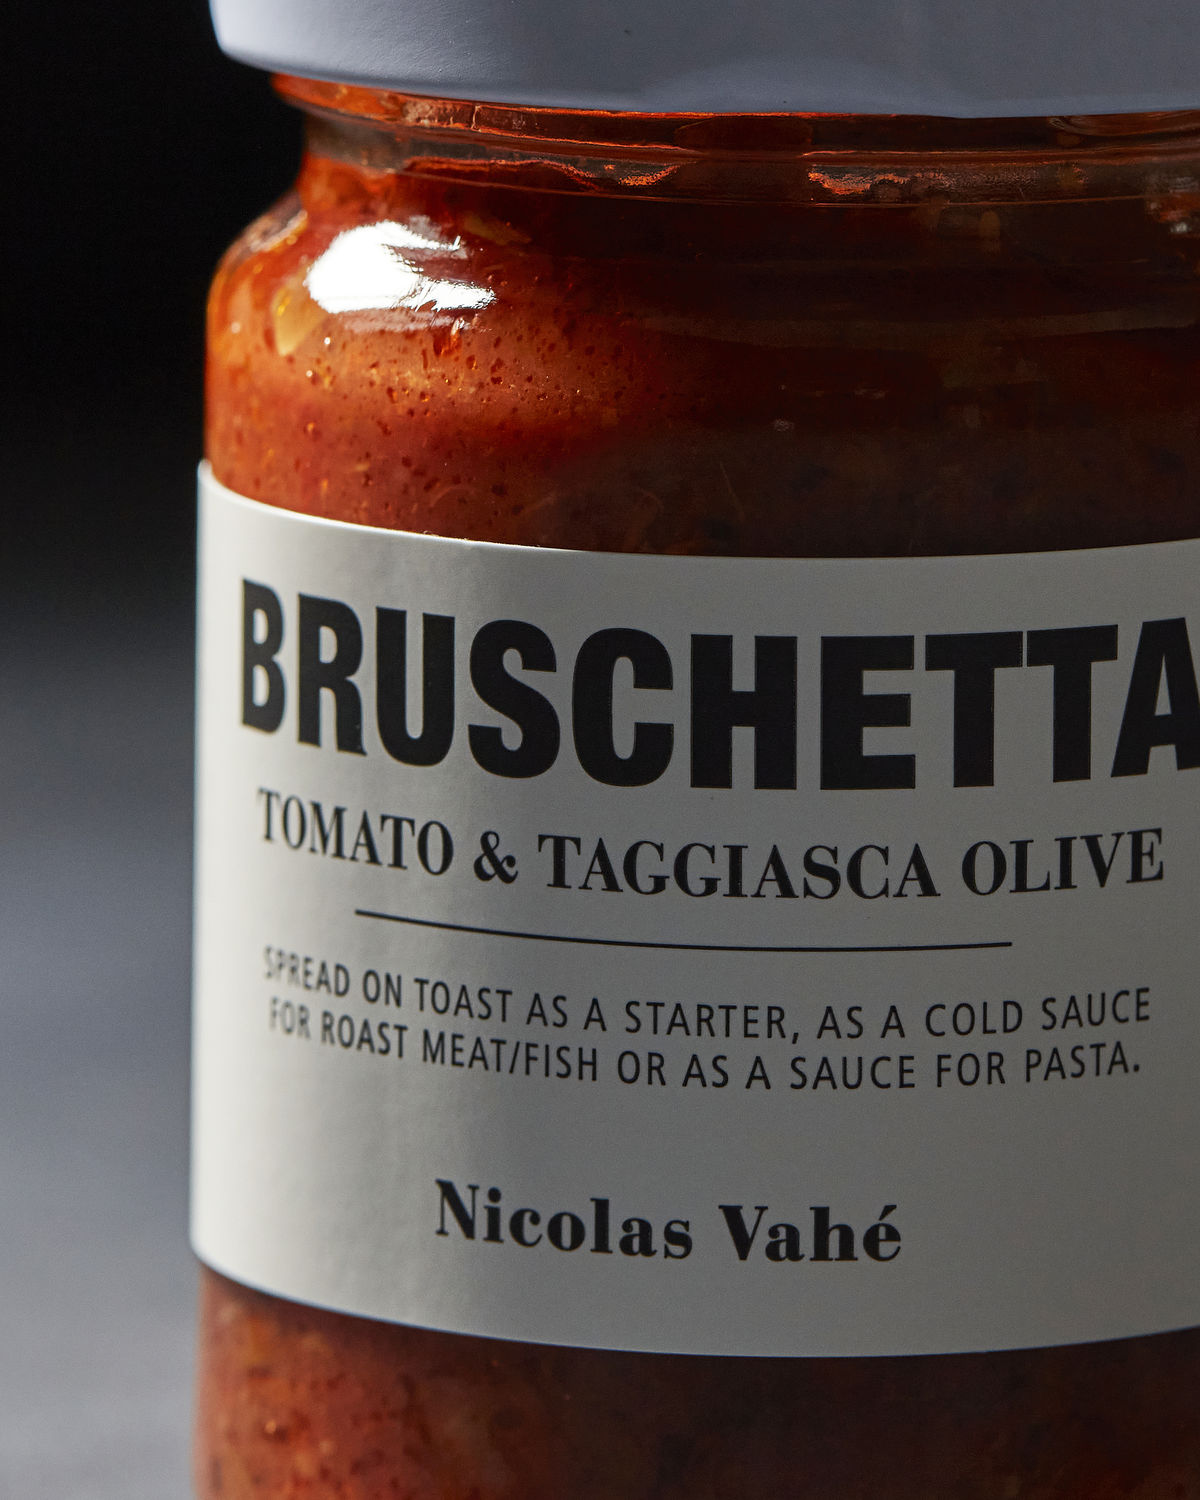 Nicolas Vahé Bruschetta Tomato & Taggiasca Olive